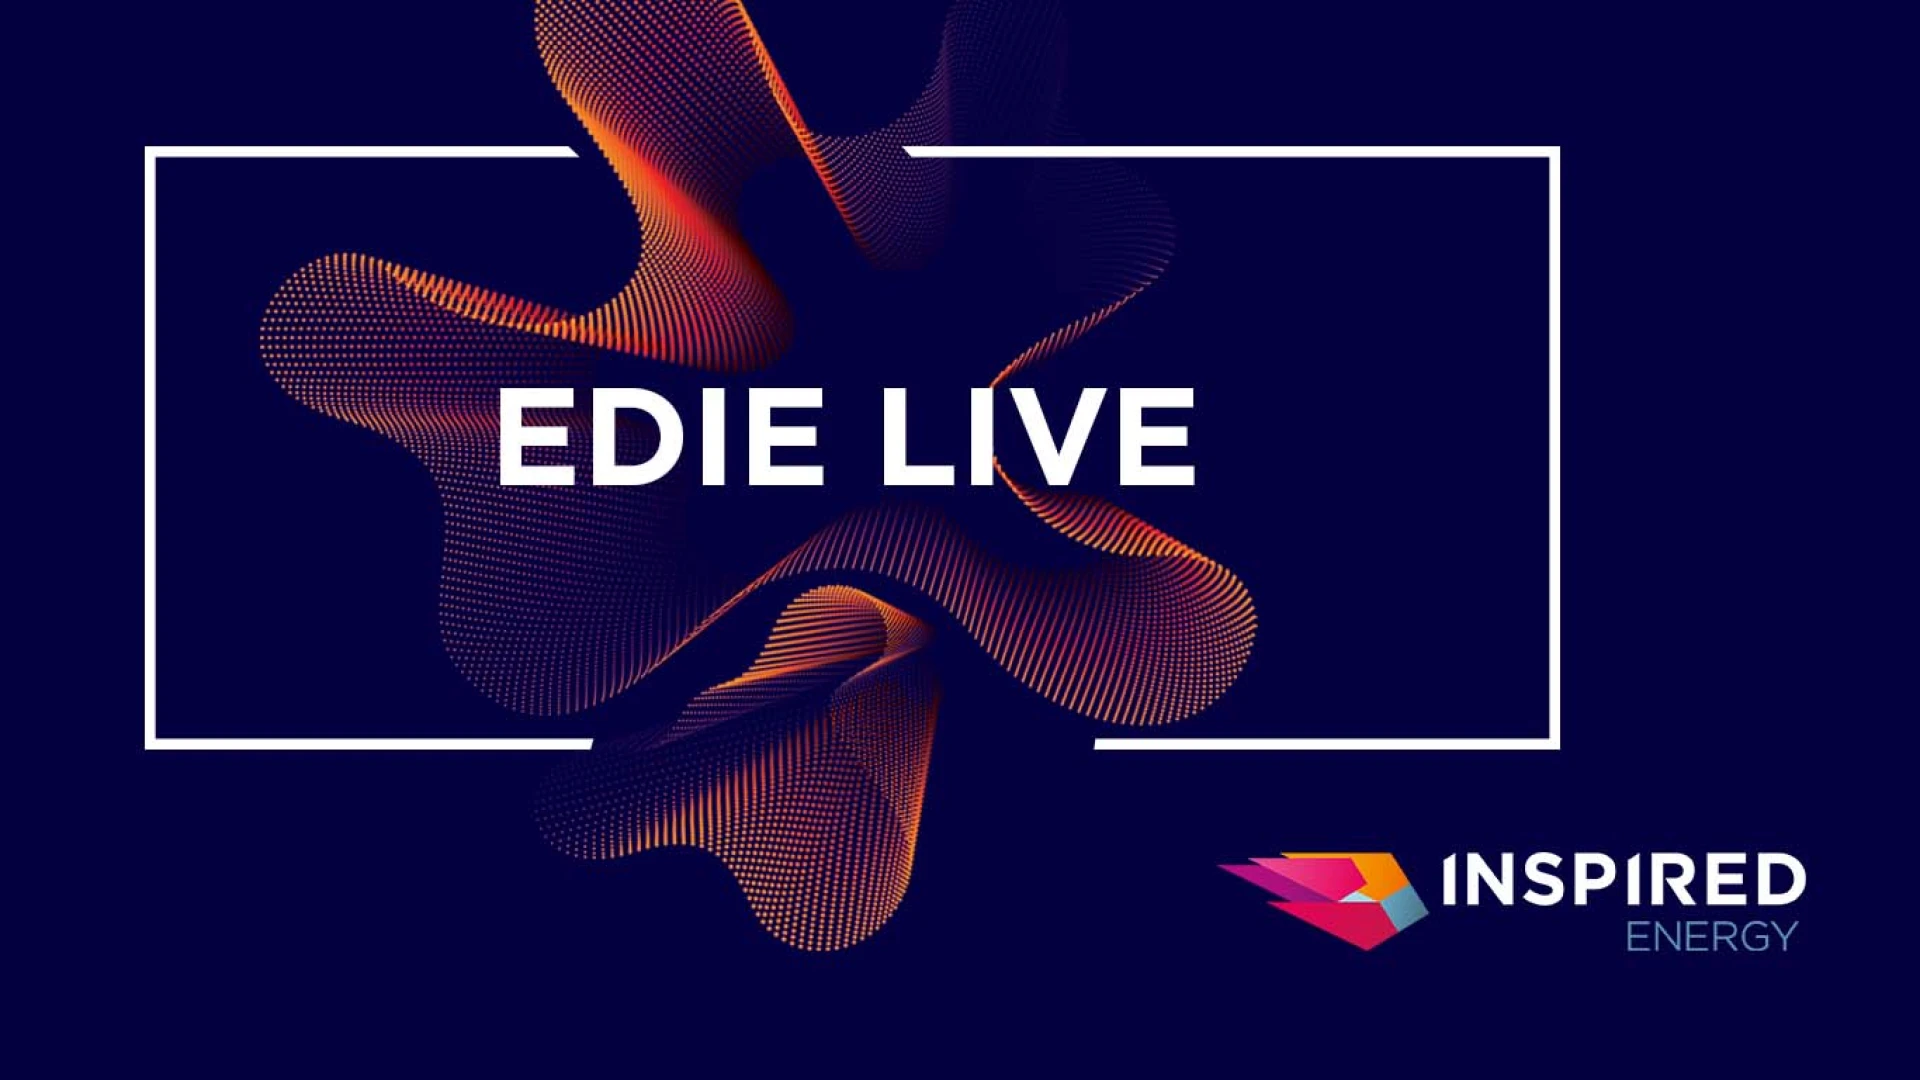 Inspired Energy - Edie Live